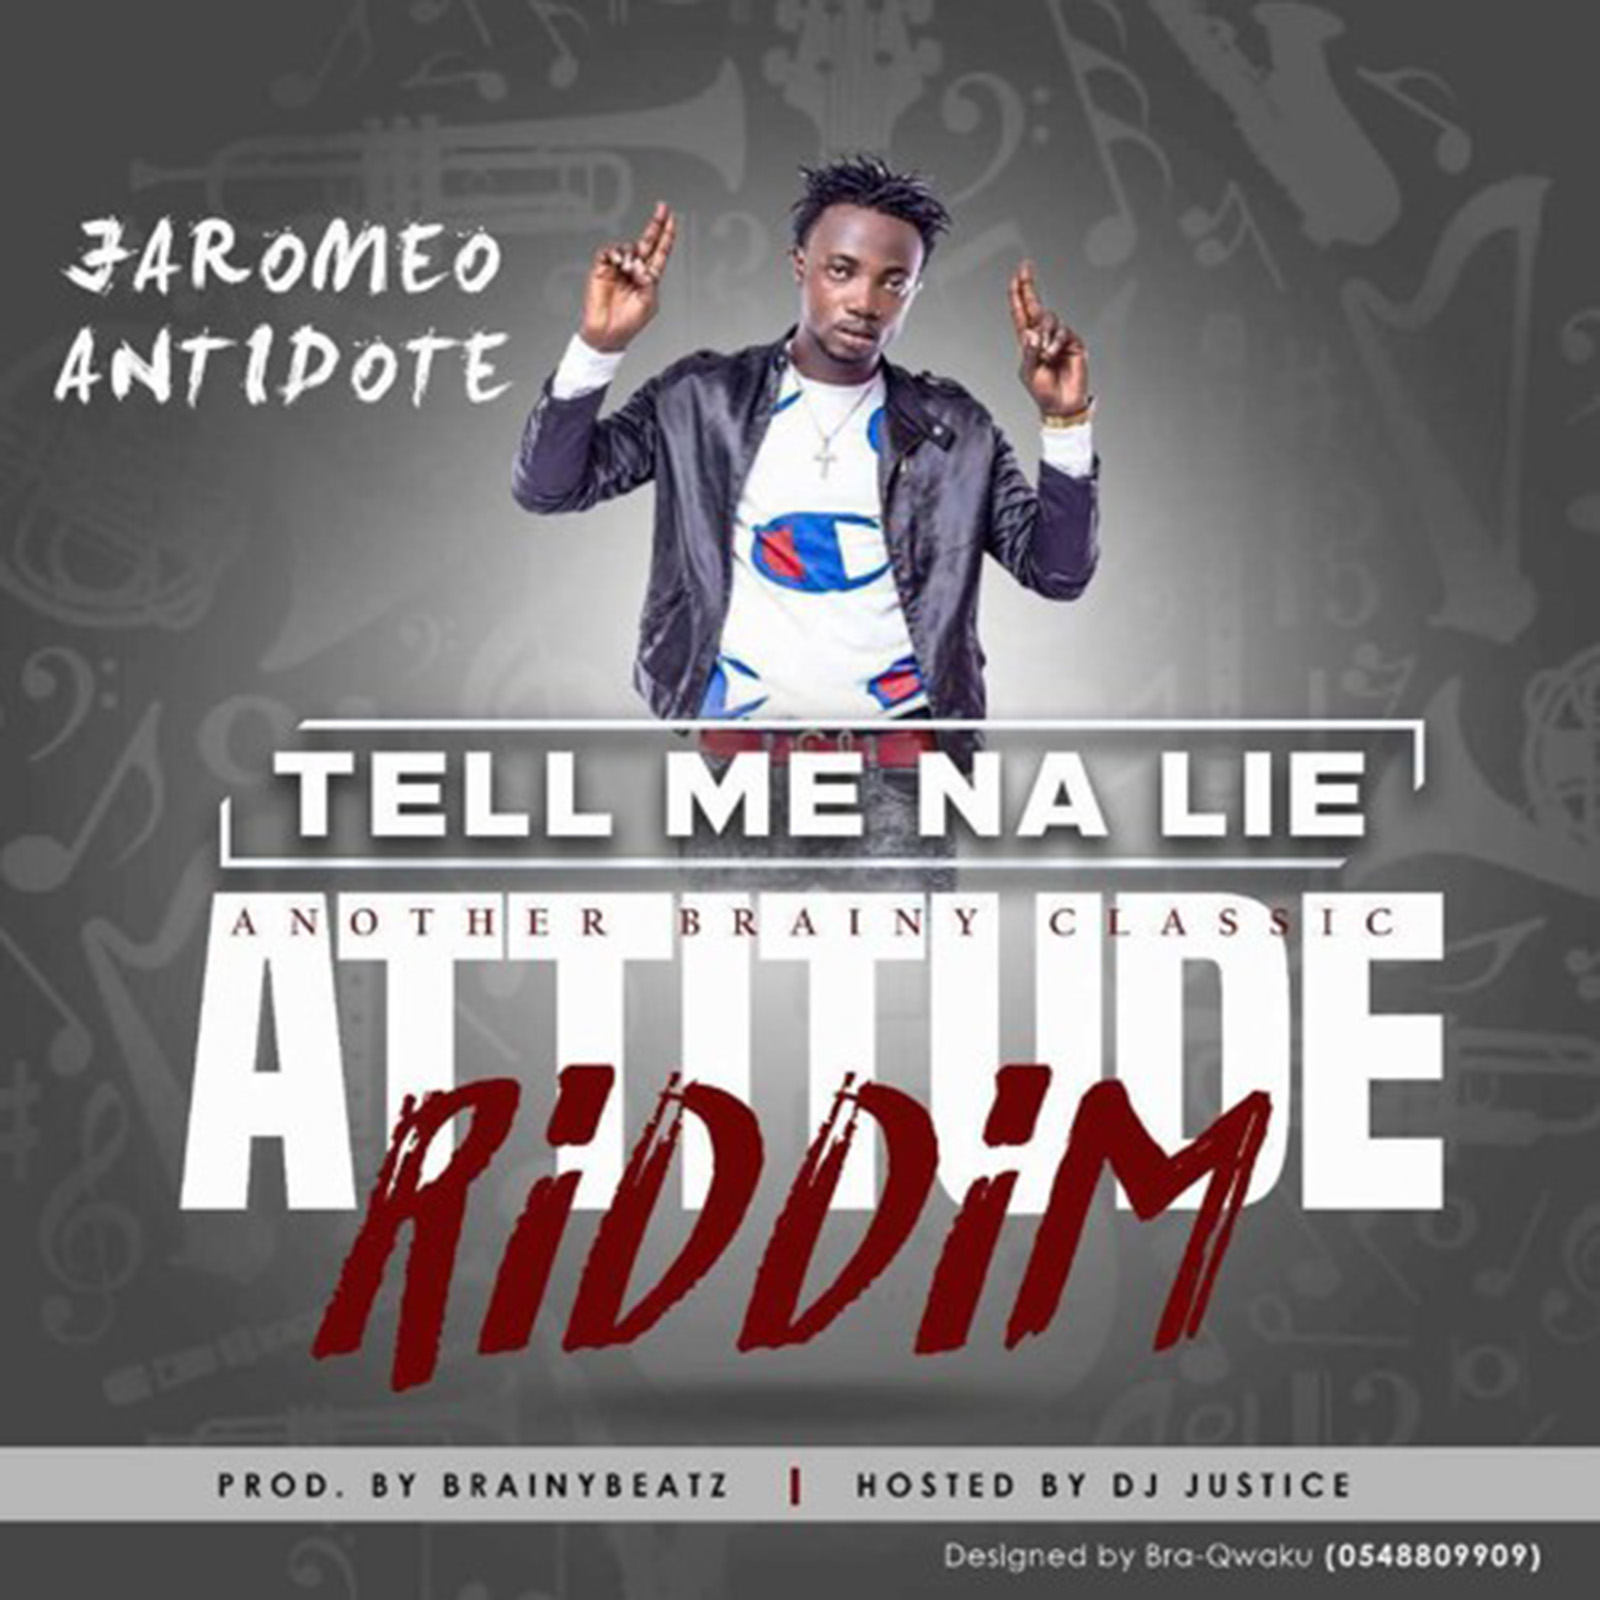 Tell Me Na Lie (Attitude Riddim) by Jaromeo Antidote